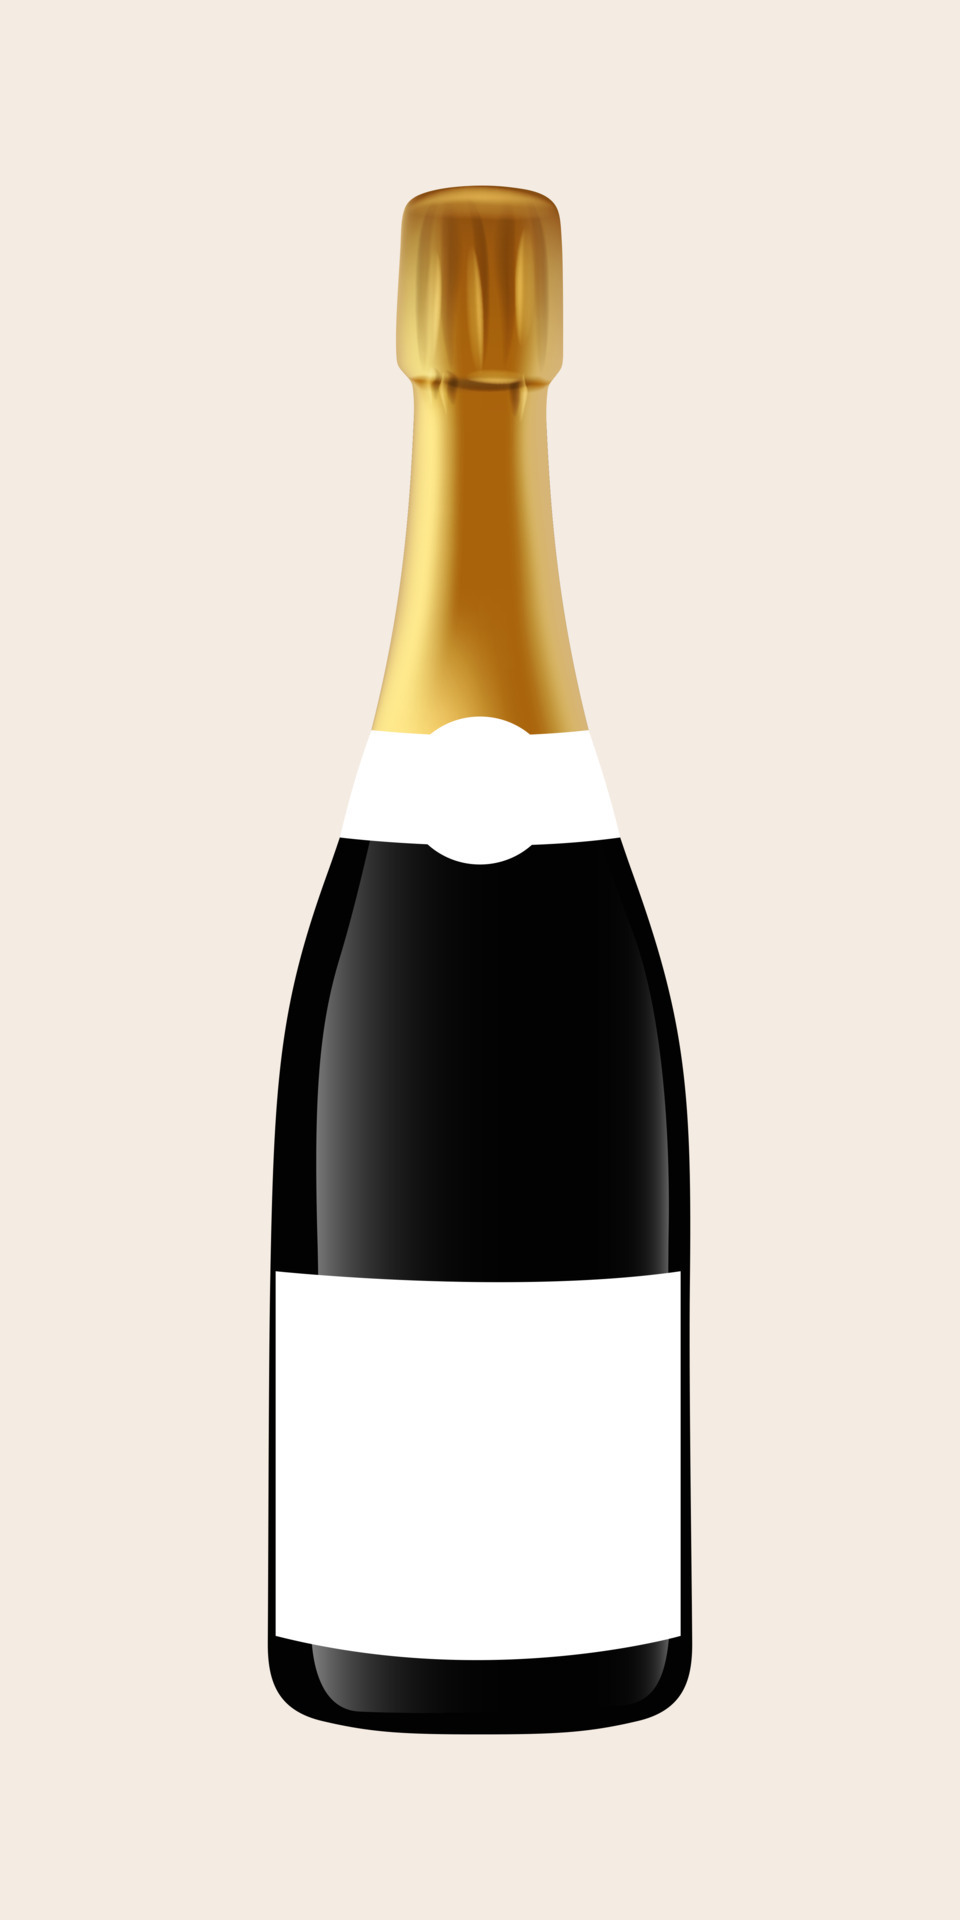 Bouchon de champagne vectoriel 2 Stock Vector